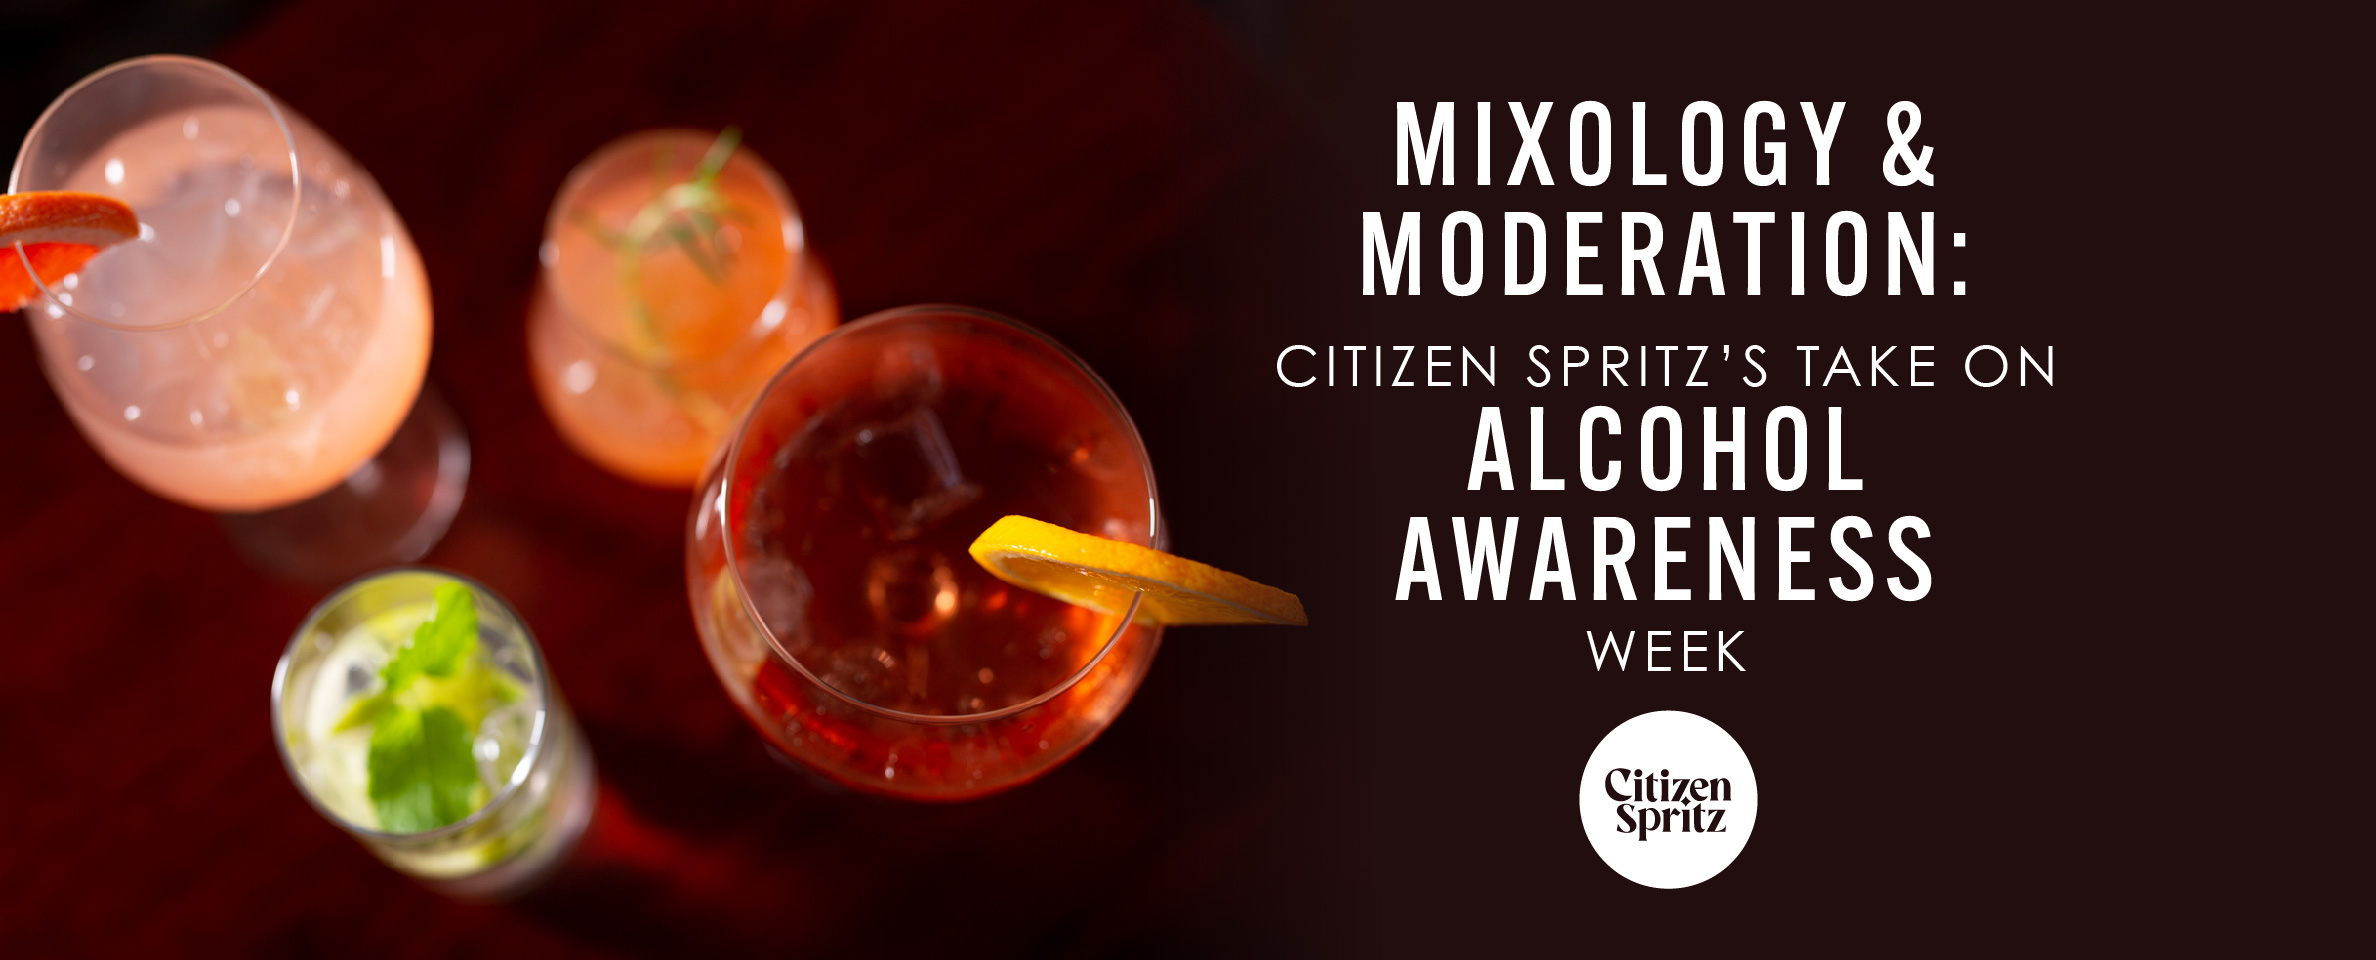 mixology & moderation: citizen spritz's take on alcohol awareness week